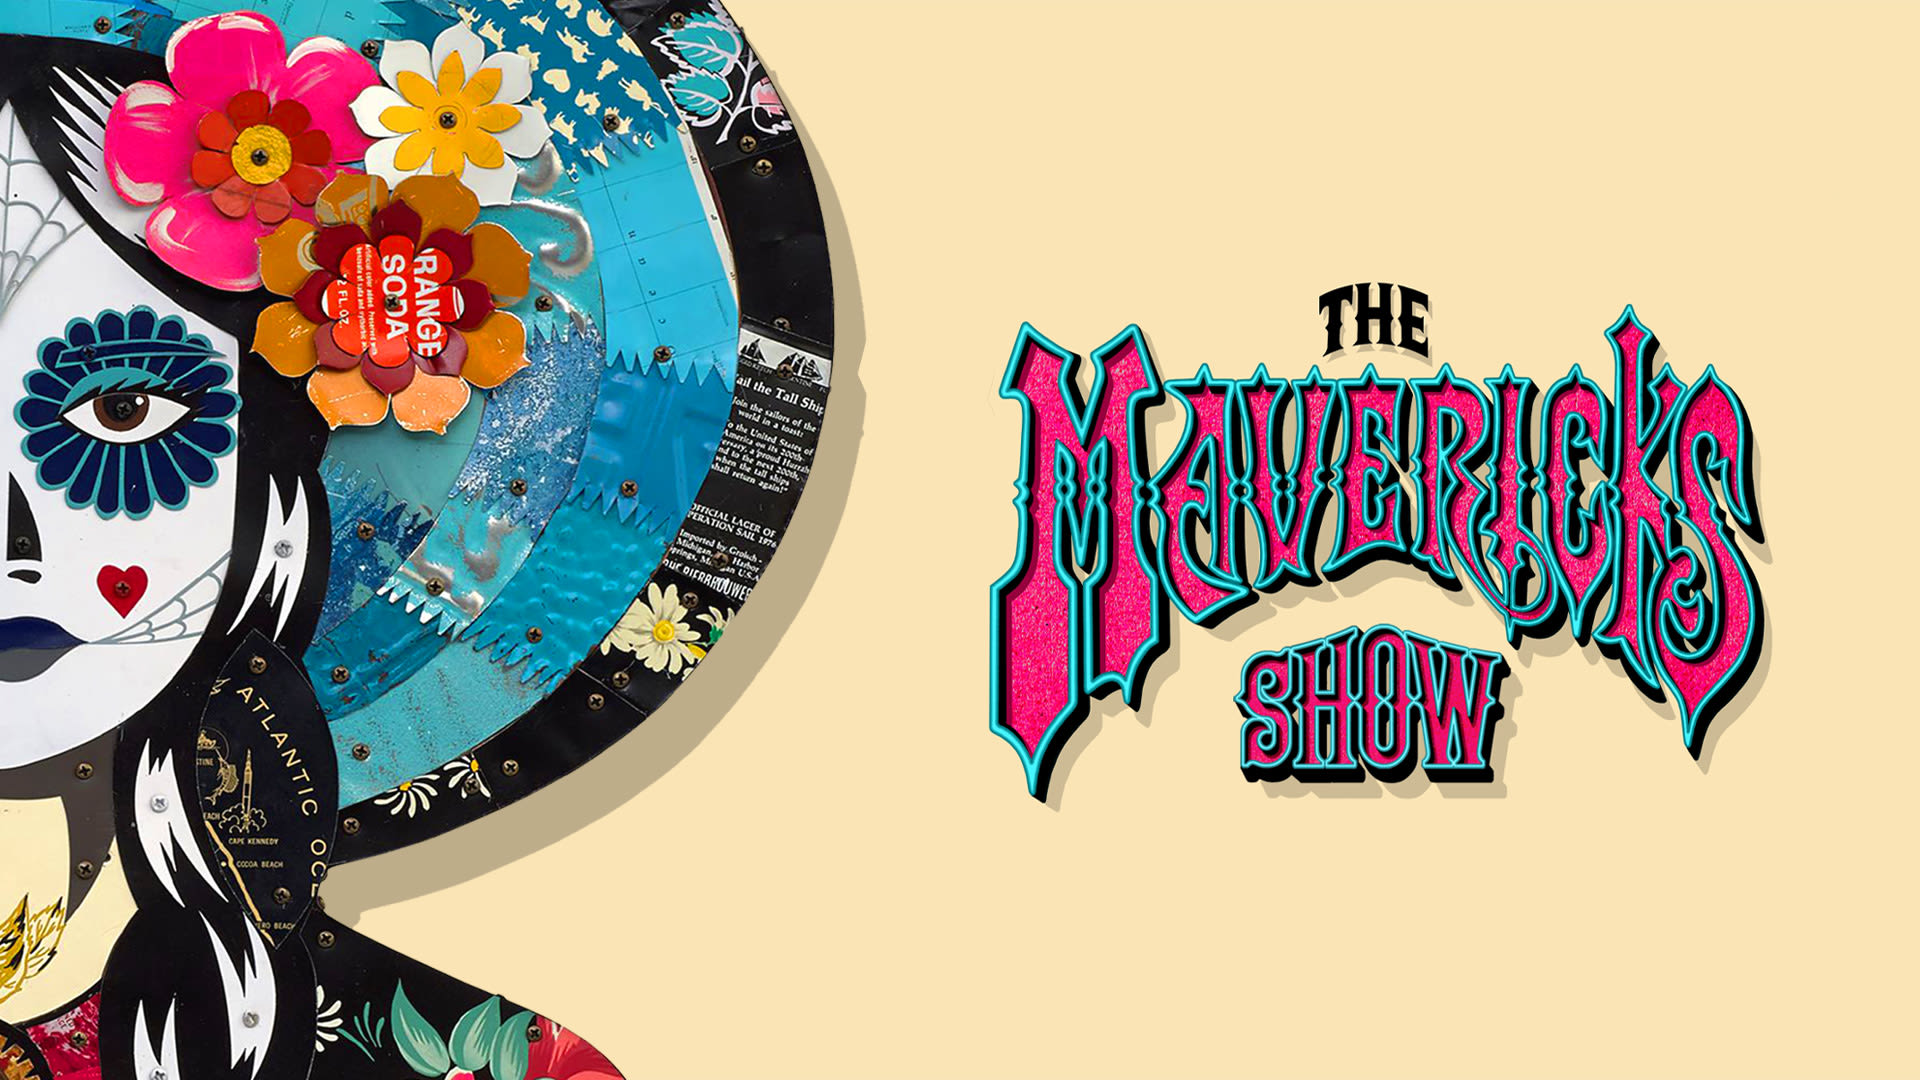 The Mavericks Show Vol. 4 — Live From Nashville